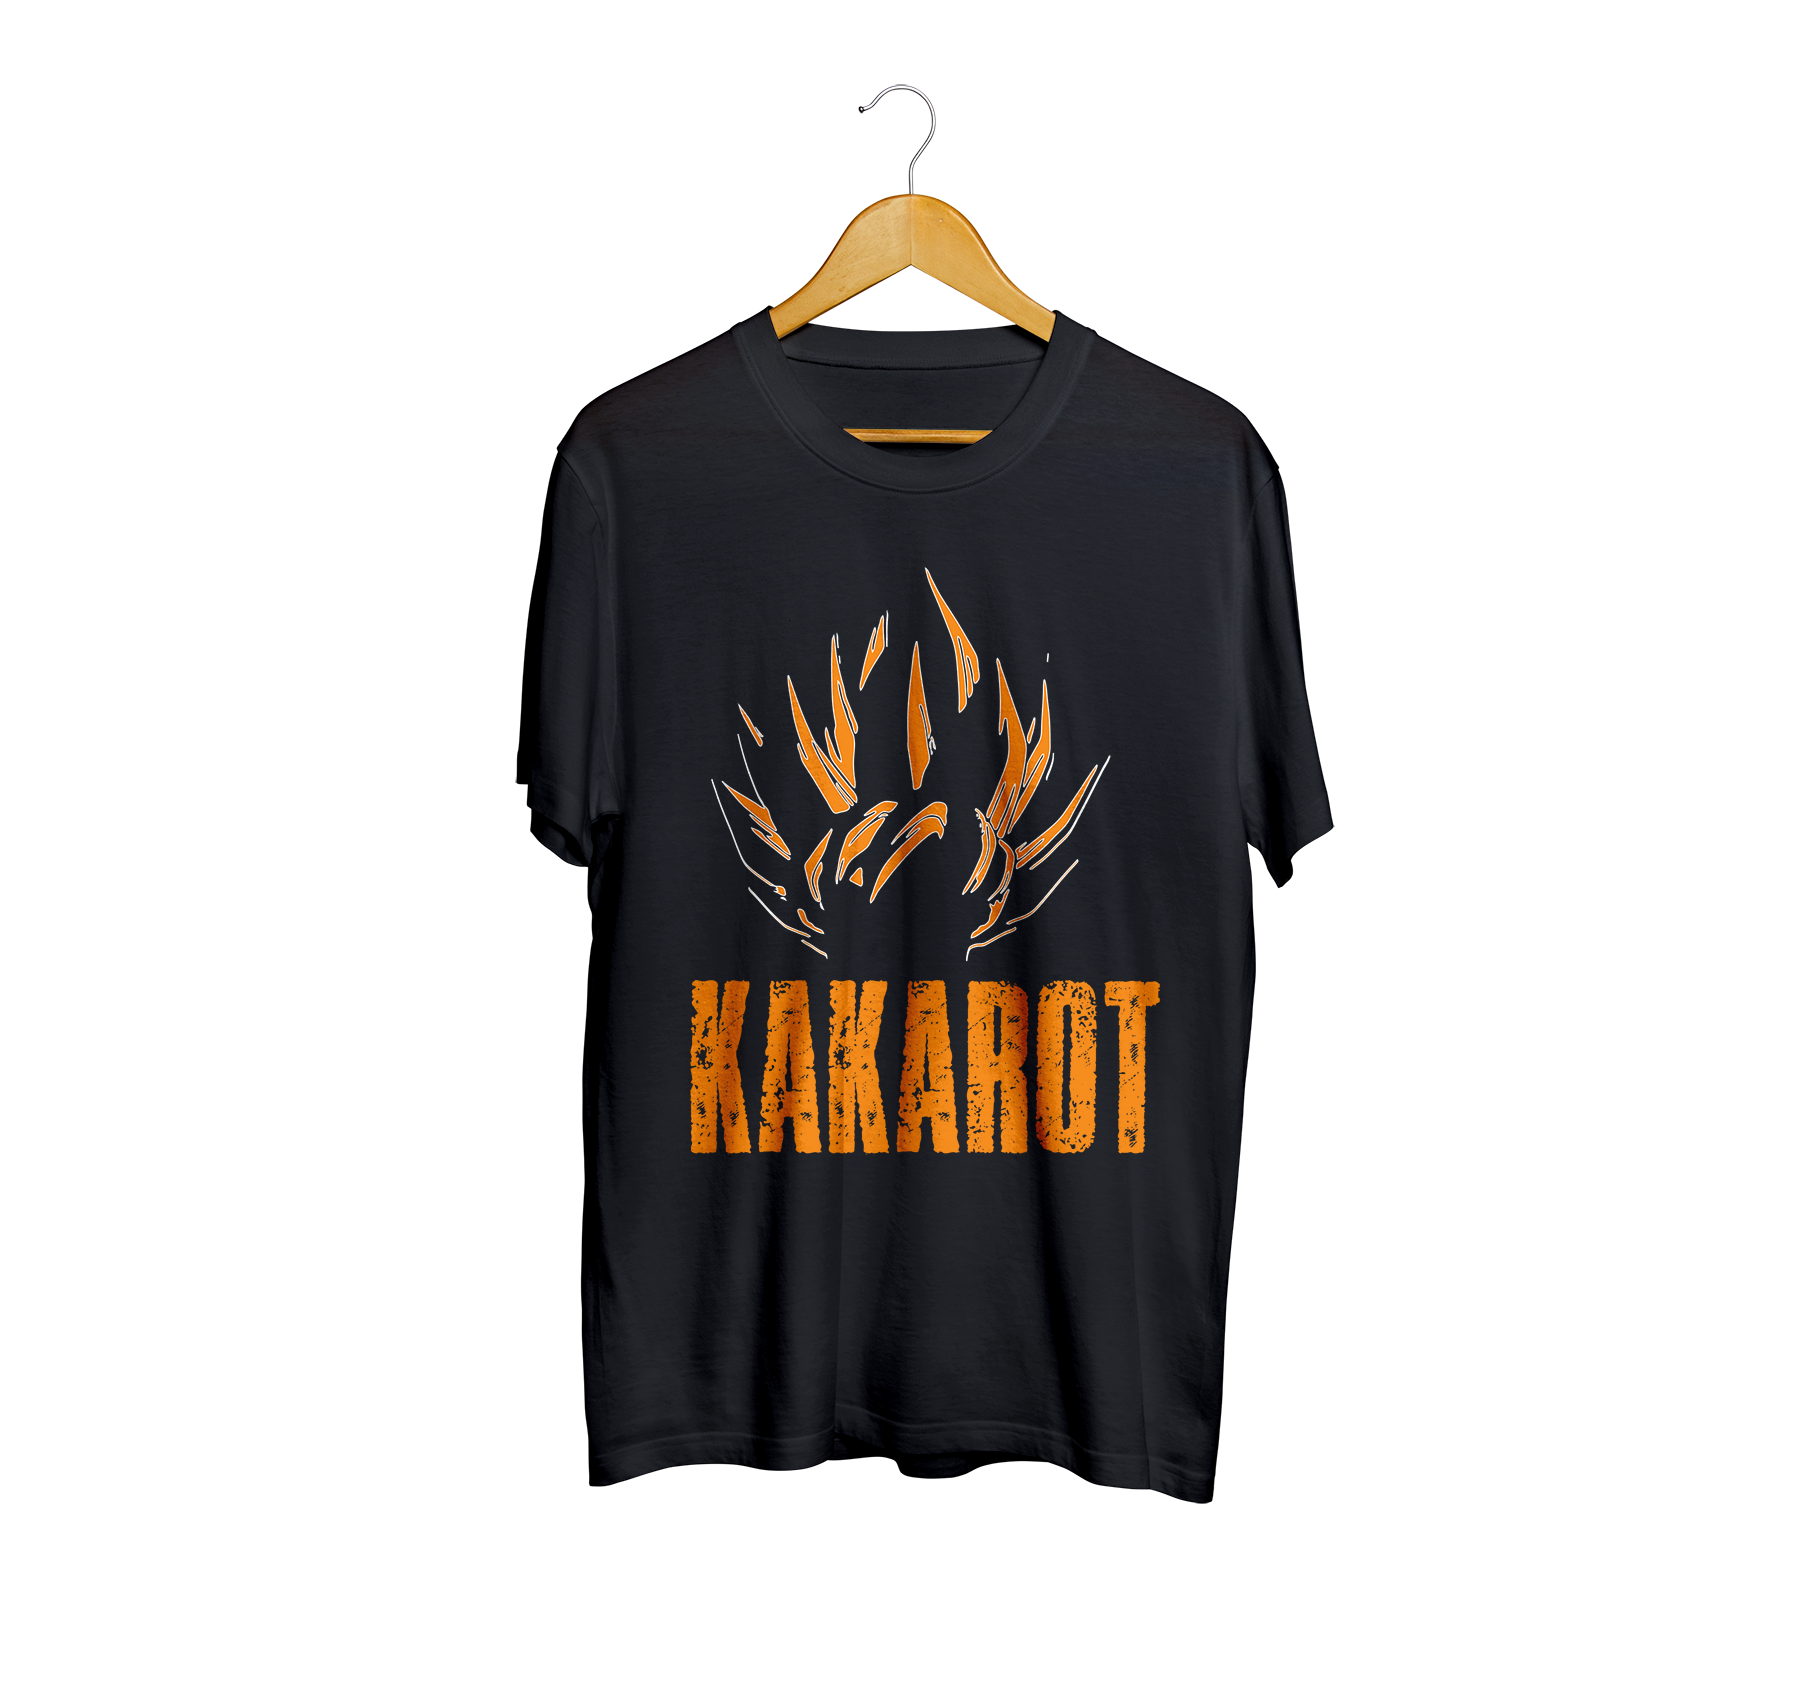 Kakarot Regular Fit Anime T-shirt but drafted